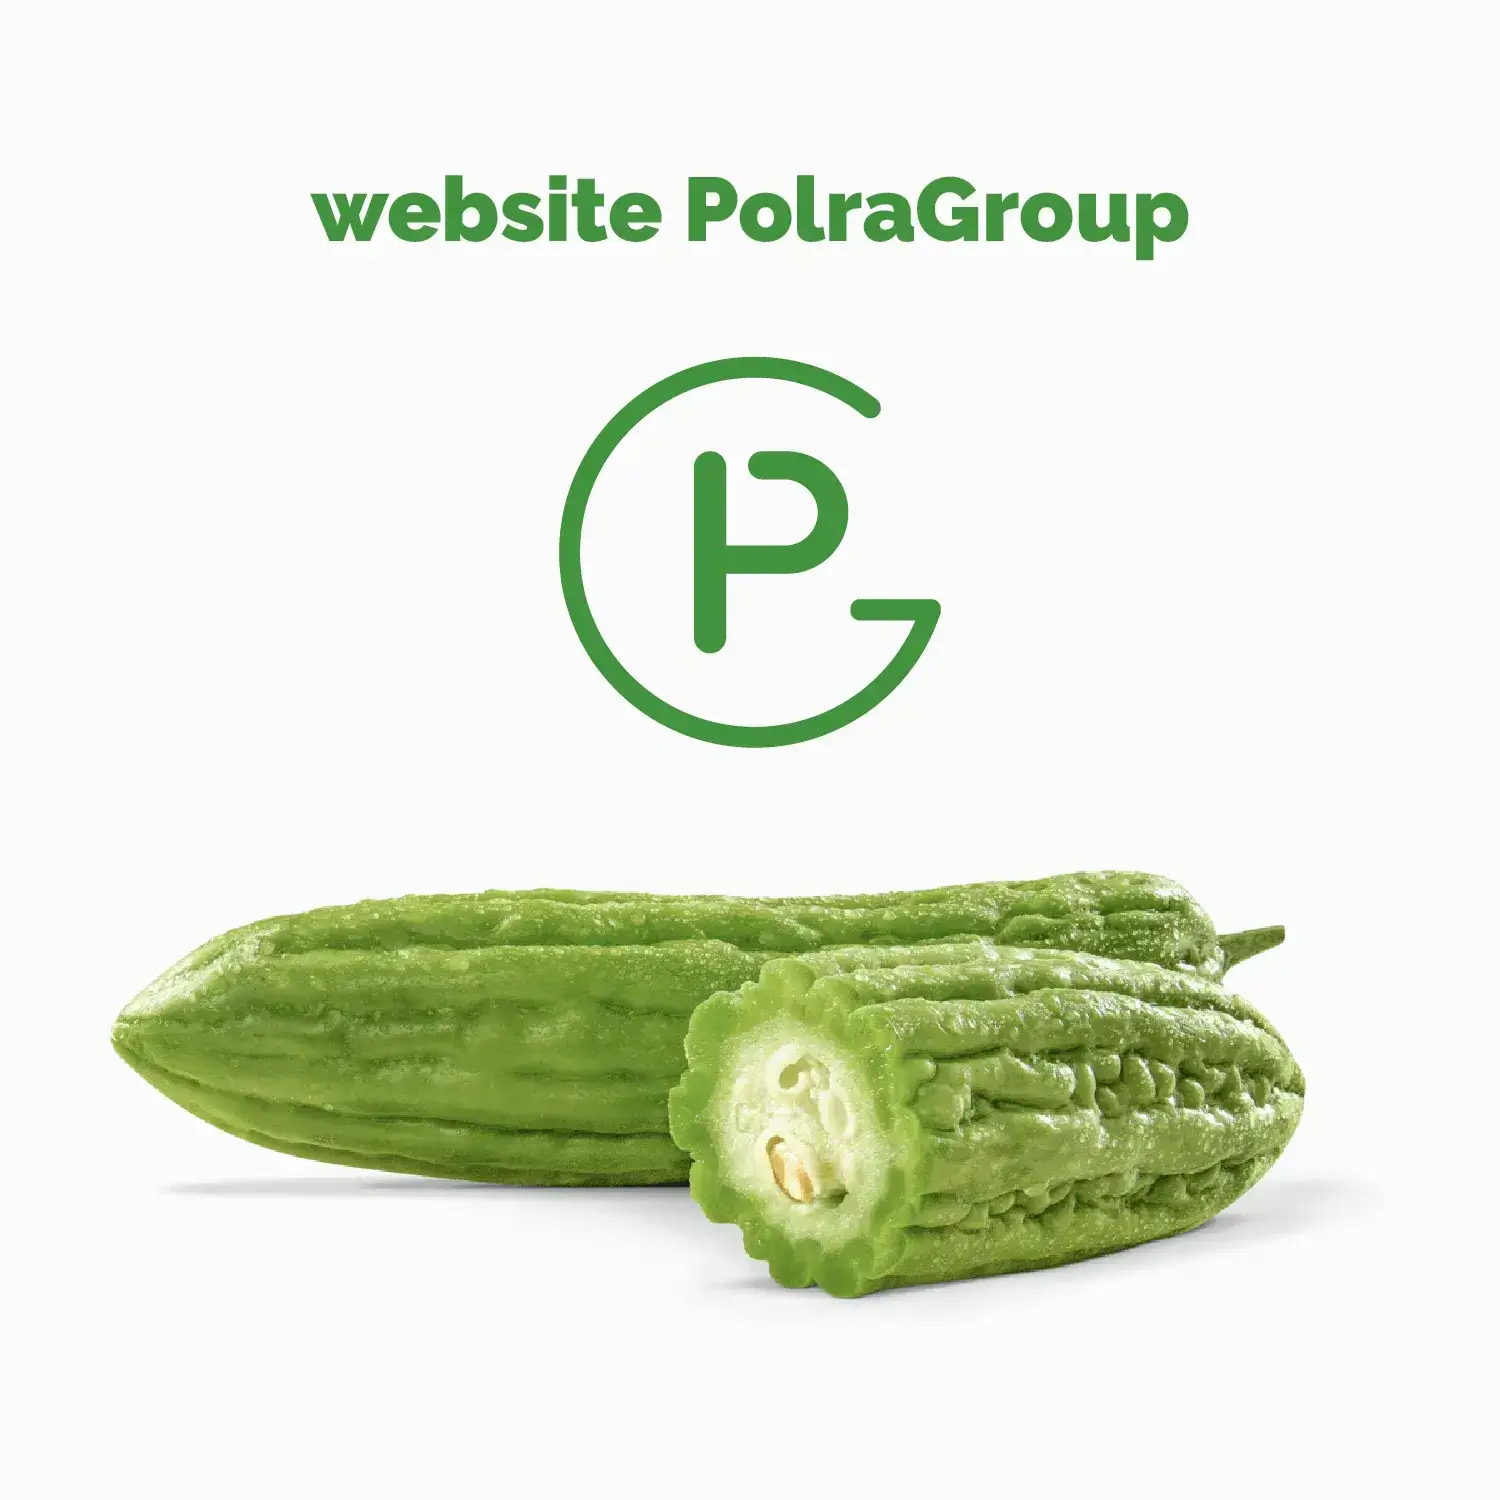 PolraGroup website